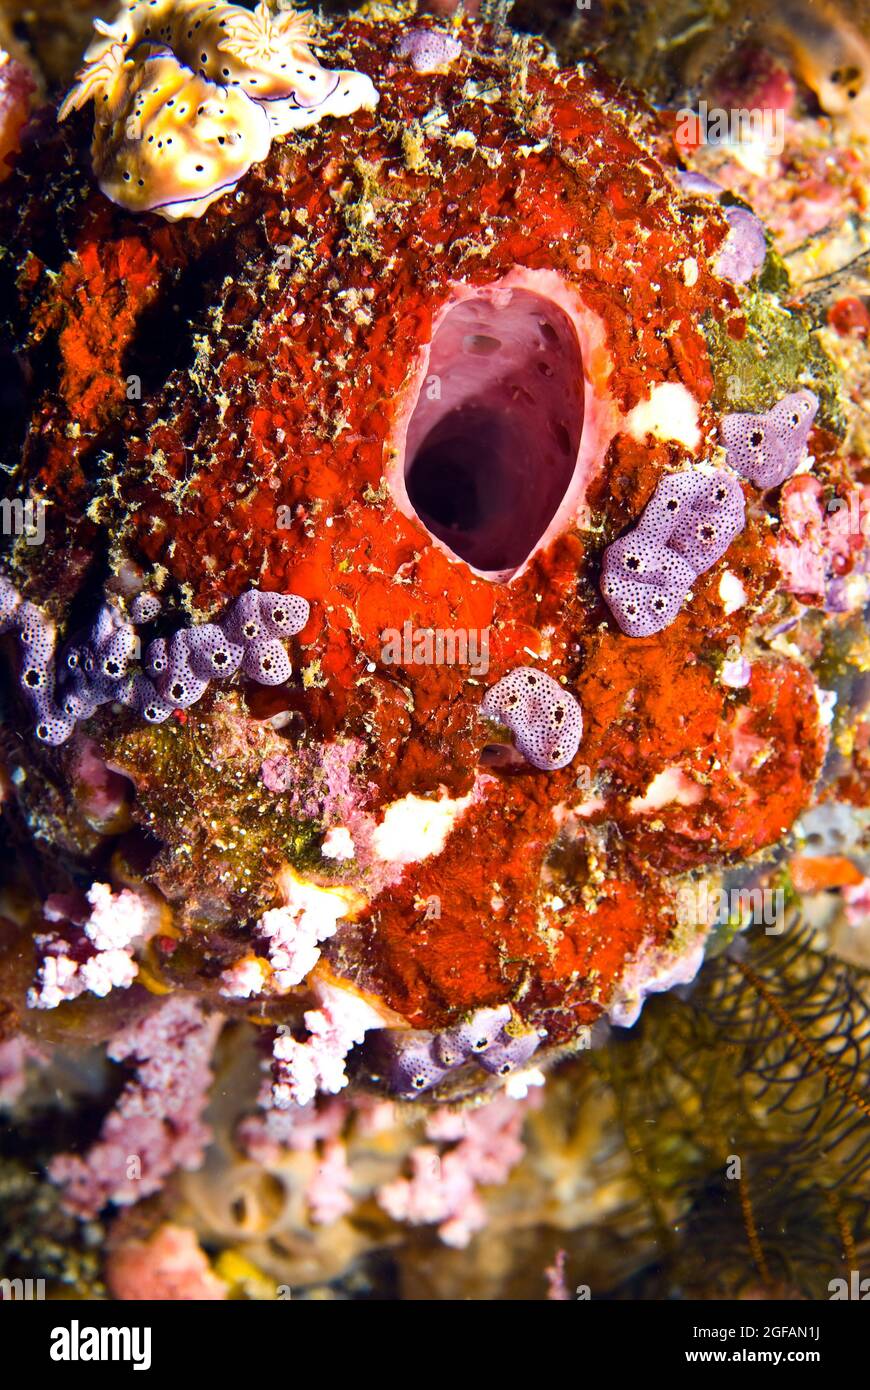 Lavender encrusting sponges on red vase sponge, Bunaken National Marine Park, Sulawesi, Indonesia Stock Photo